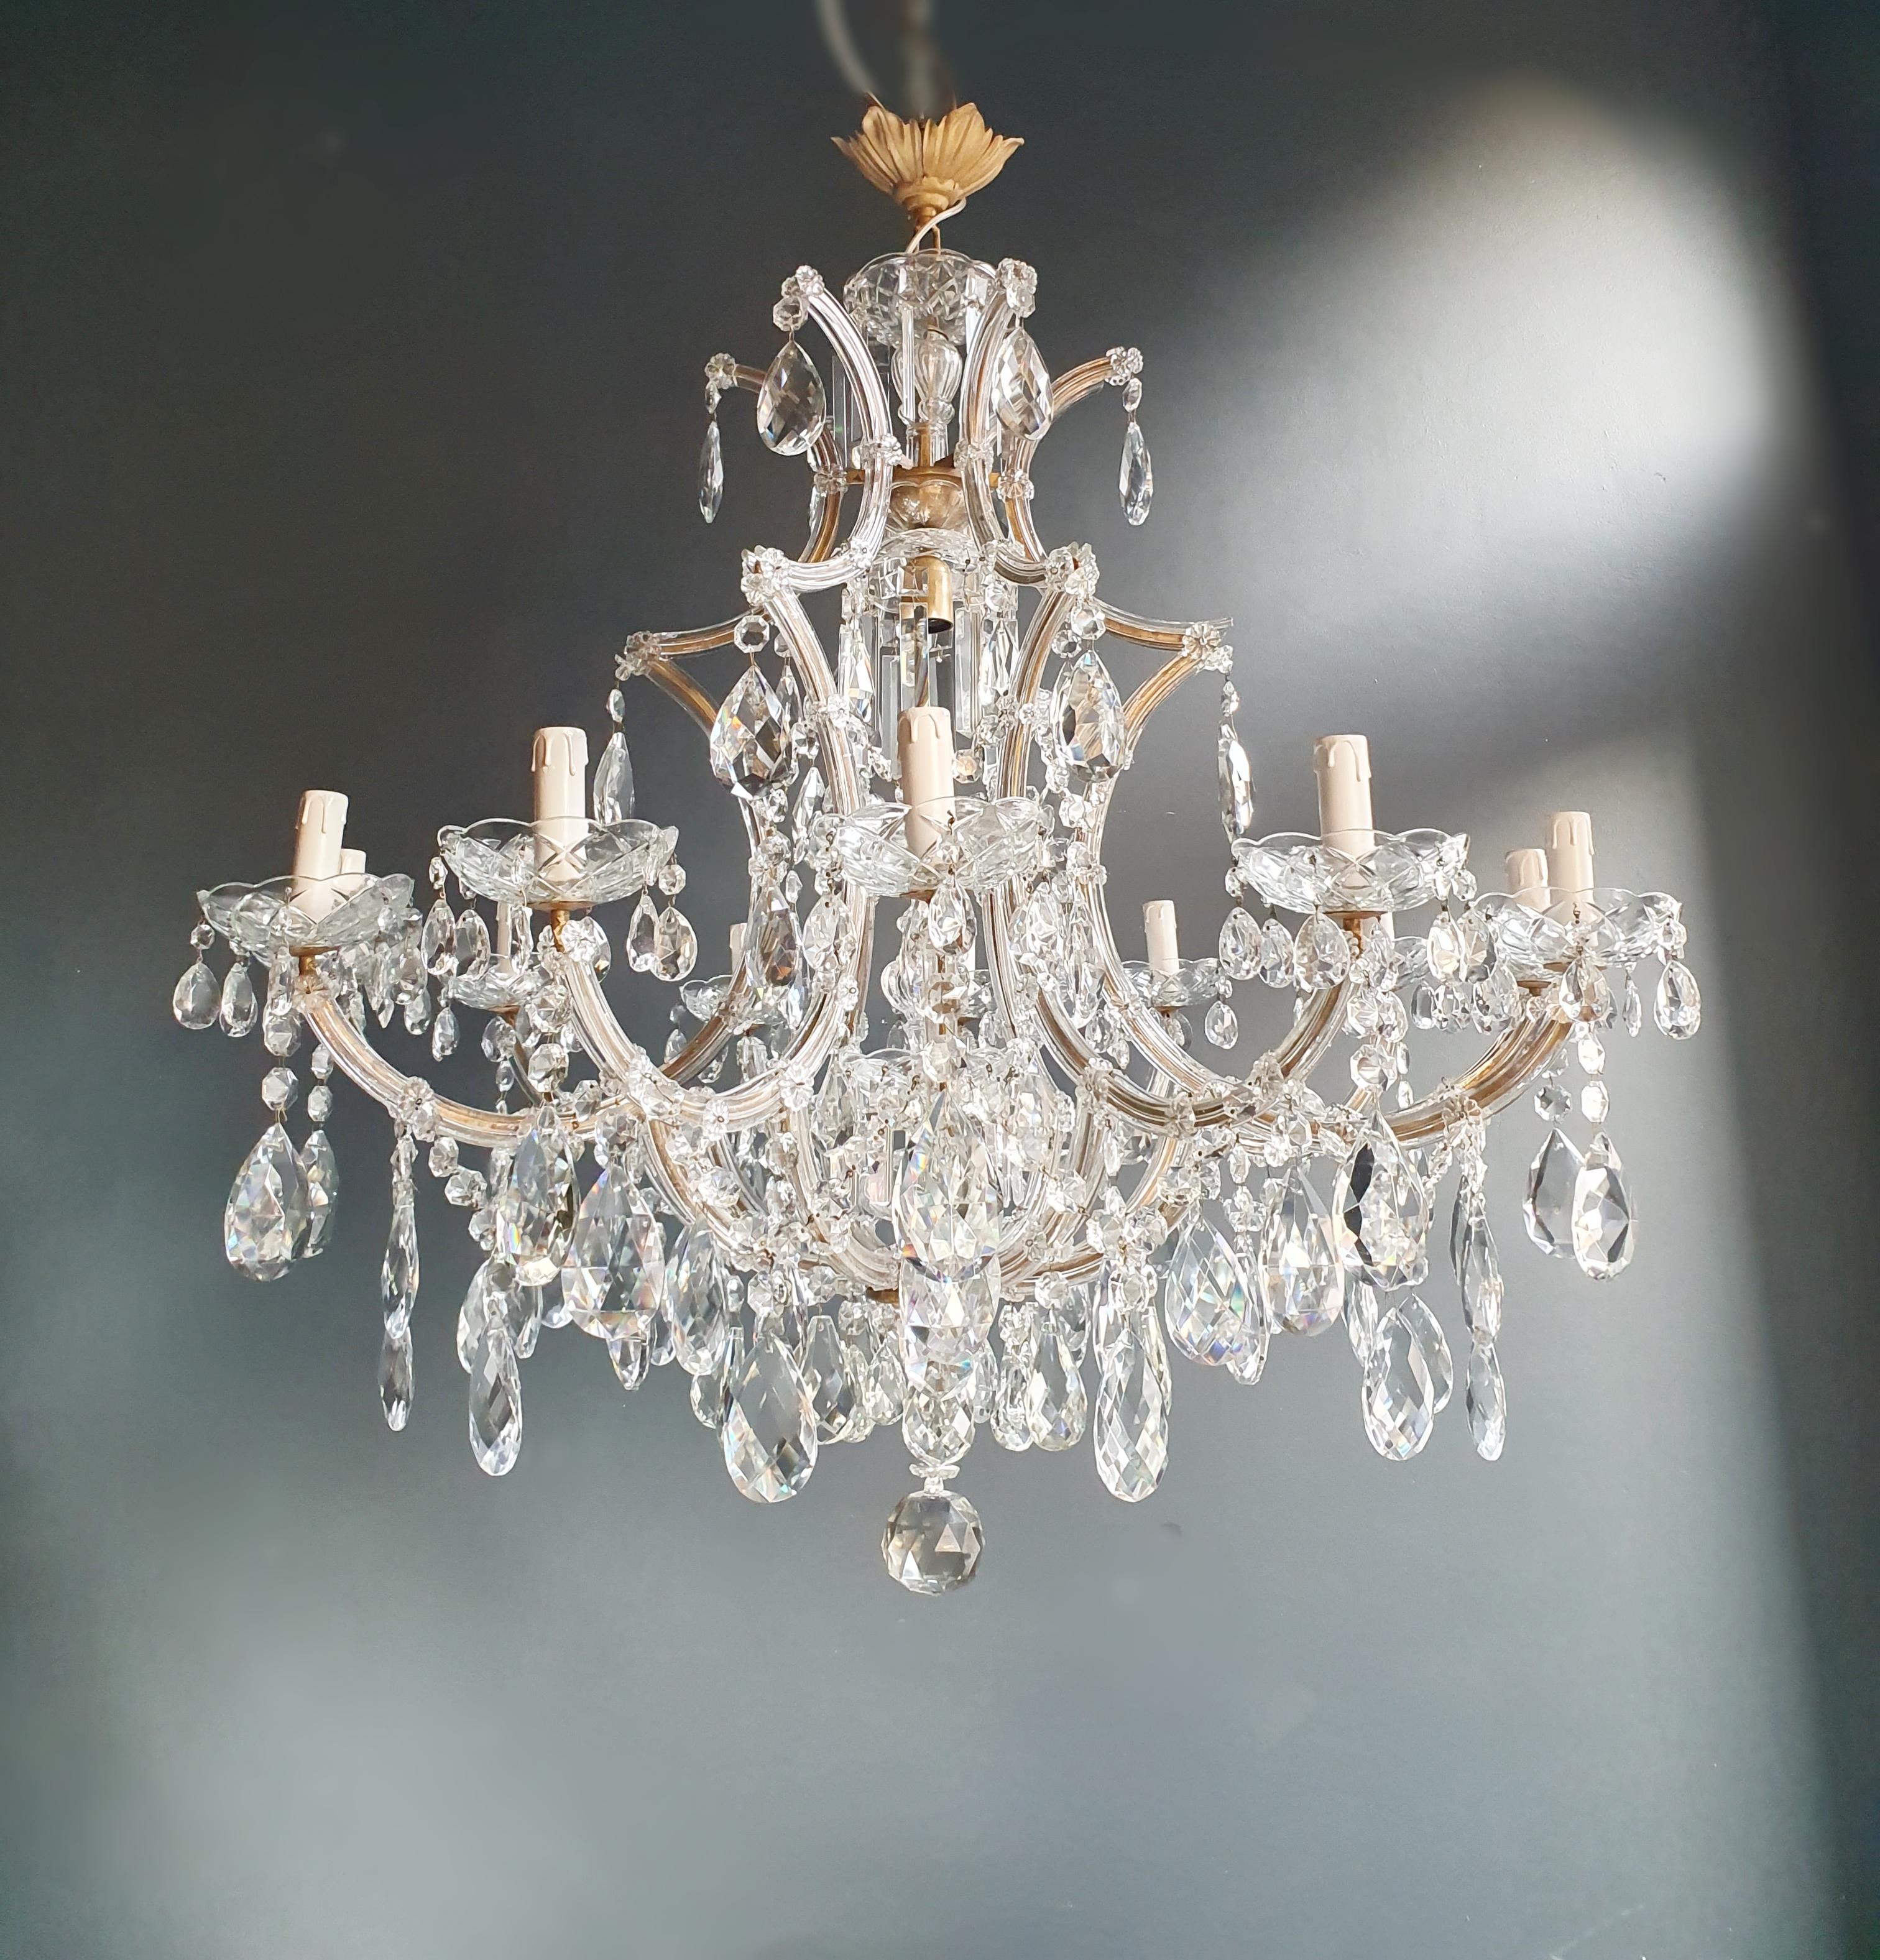 Brass Maria Theresa Crystal Chandelier Antique Ceiling Lamp Lustre Art Nouveau